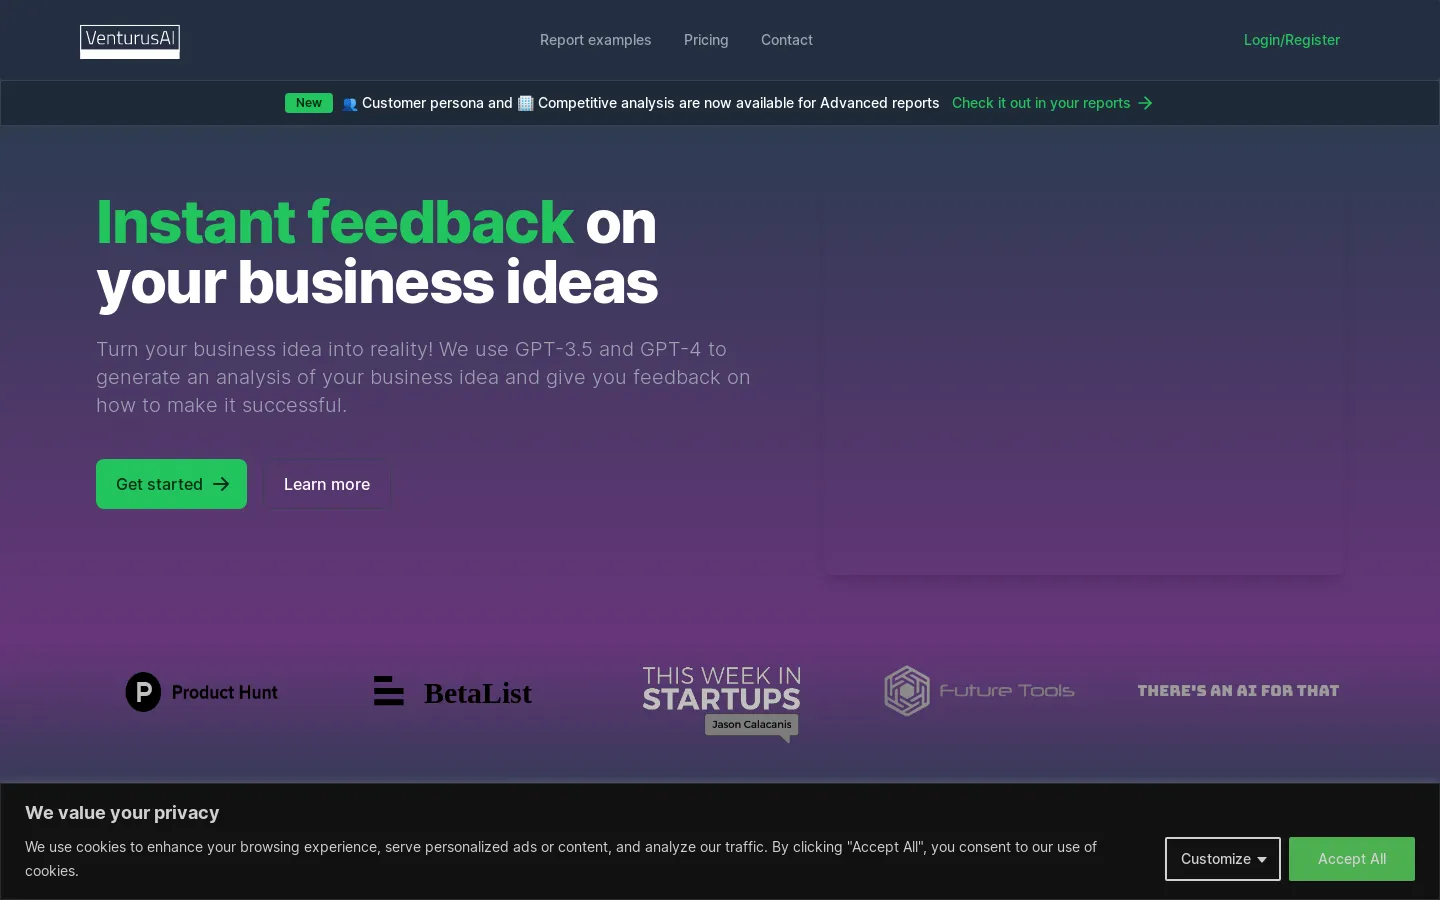 VenturusAI - Instant feedback on your business ideas